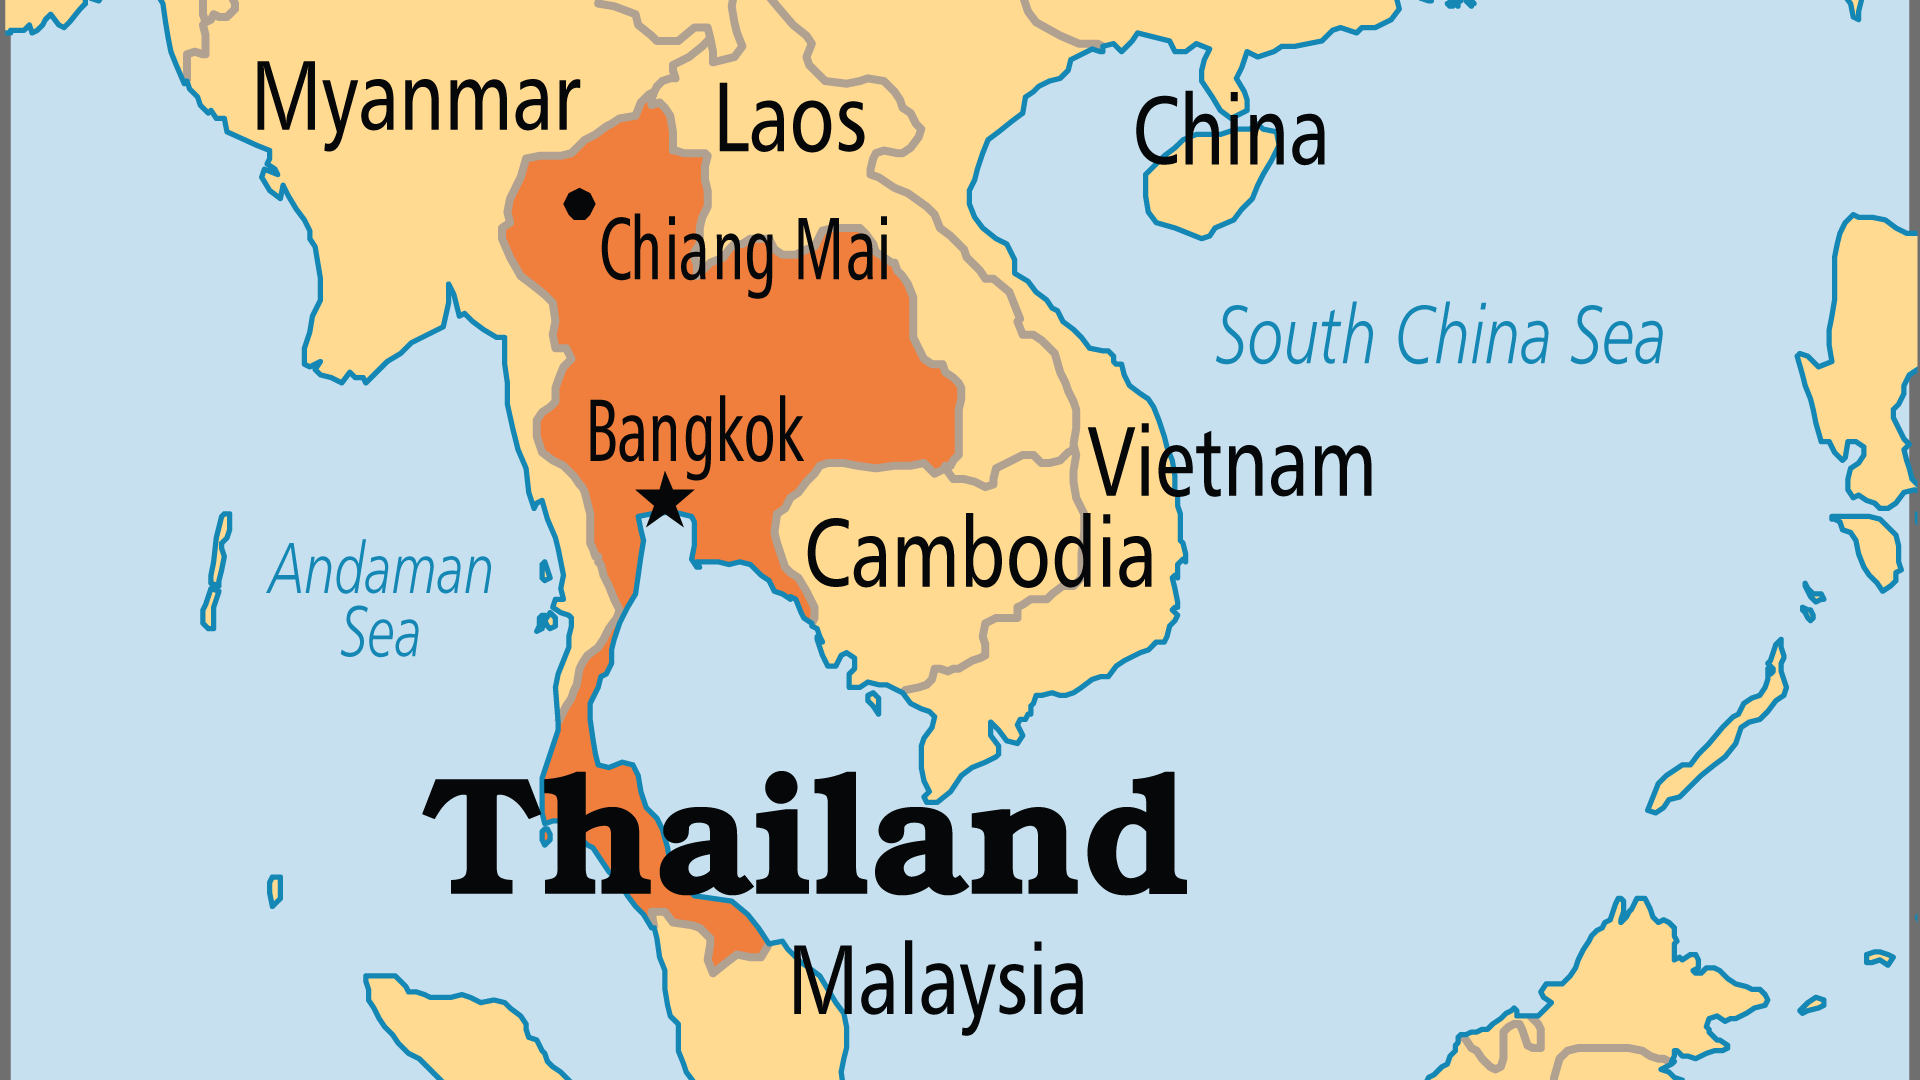 Таиланд где. Таиланд на карте. Таиланд карта географическая. Thailand карта. Тайланд на карте на английском.